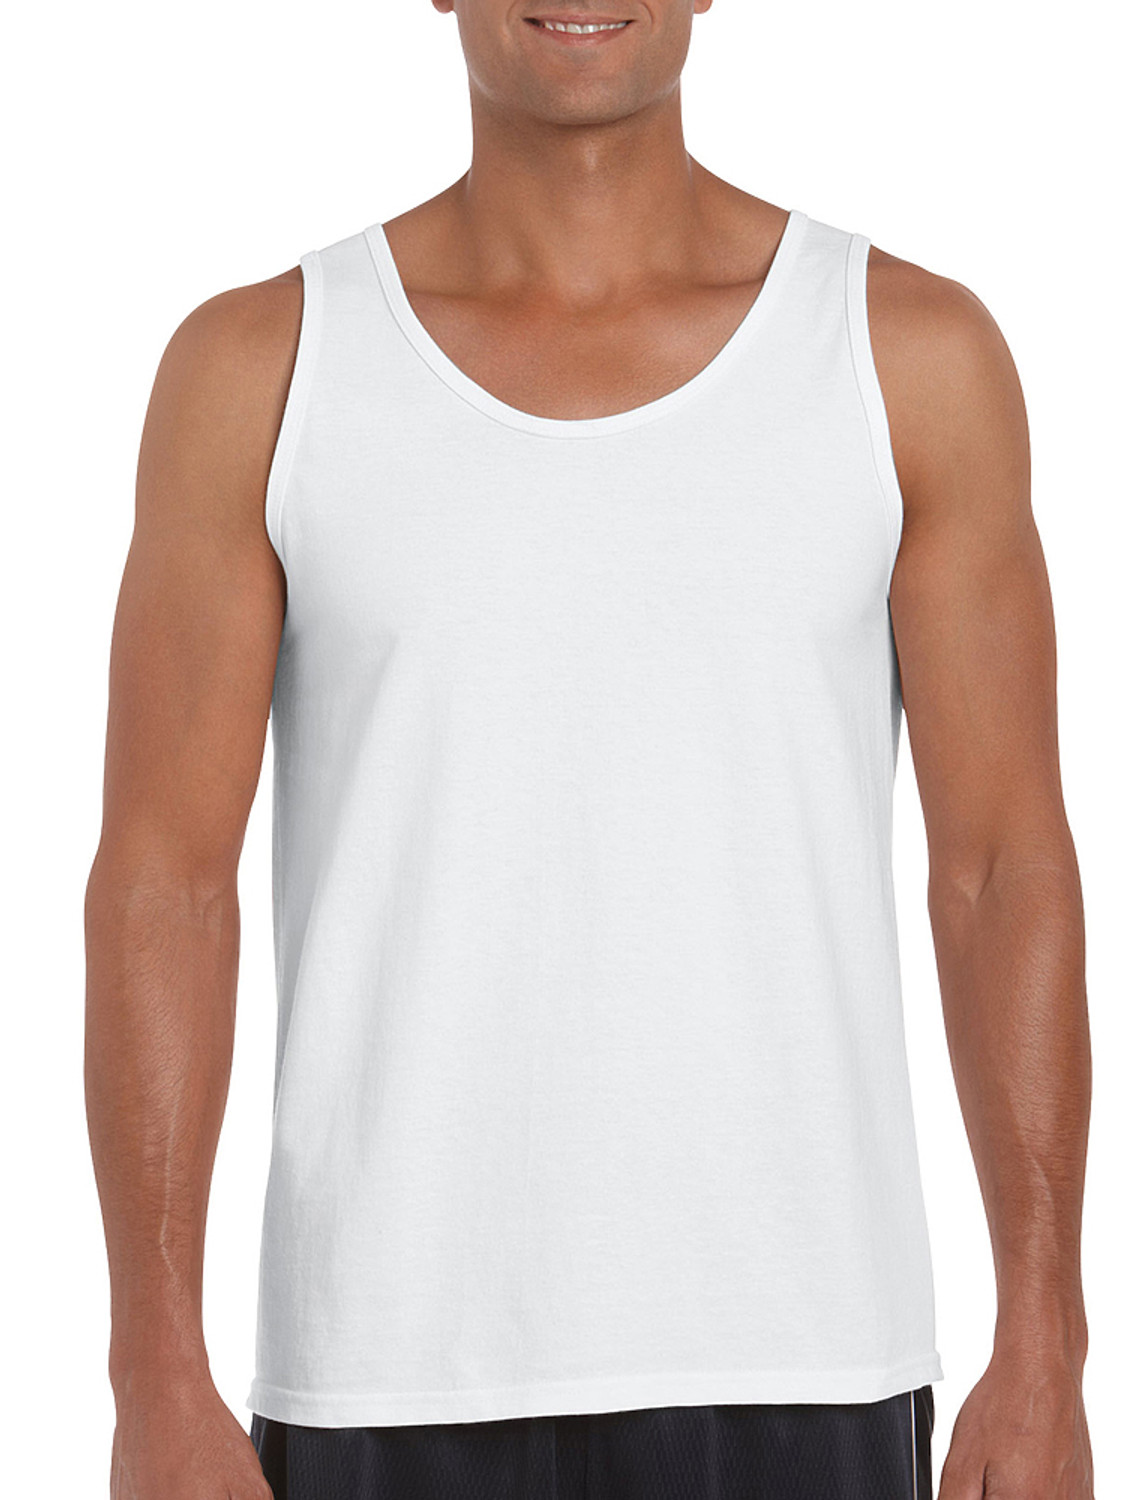 Cotton Addict Mens Jersey Muscle Slim Fit Tank Top Vest